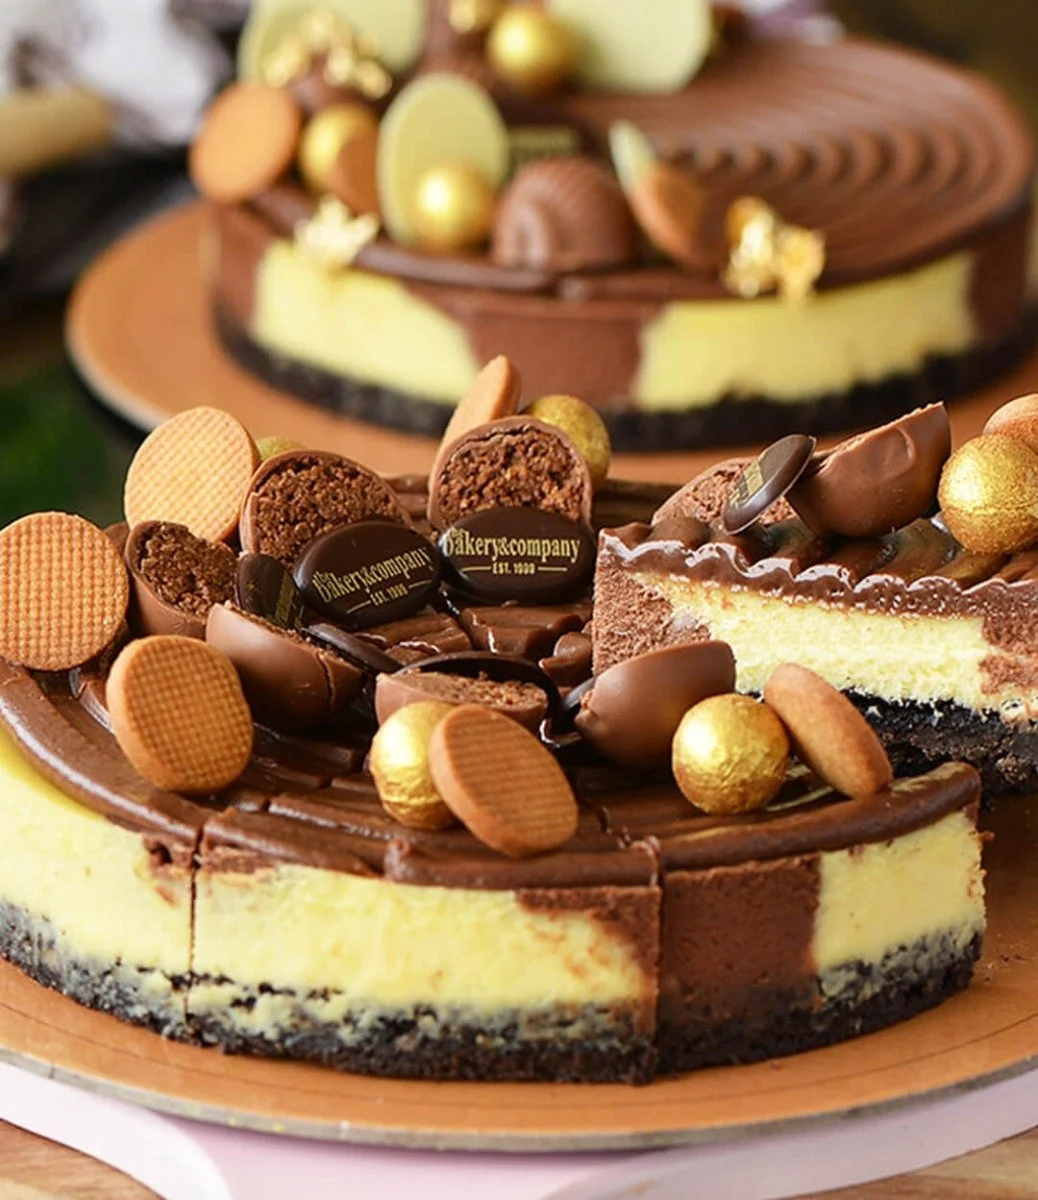 Chocolate Cheesecake by Bakery & Company